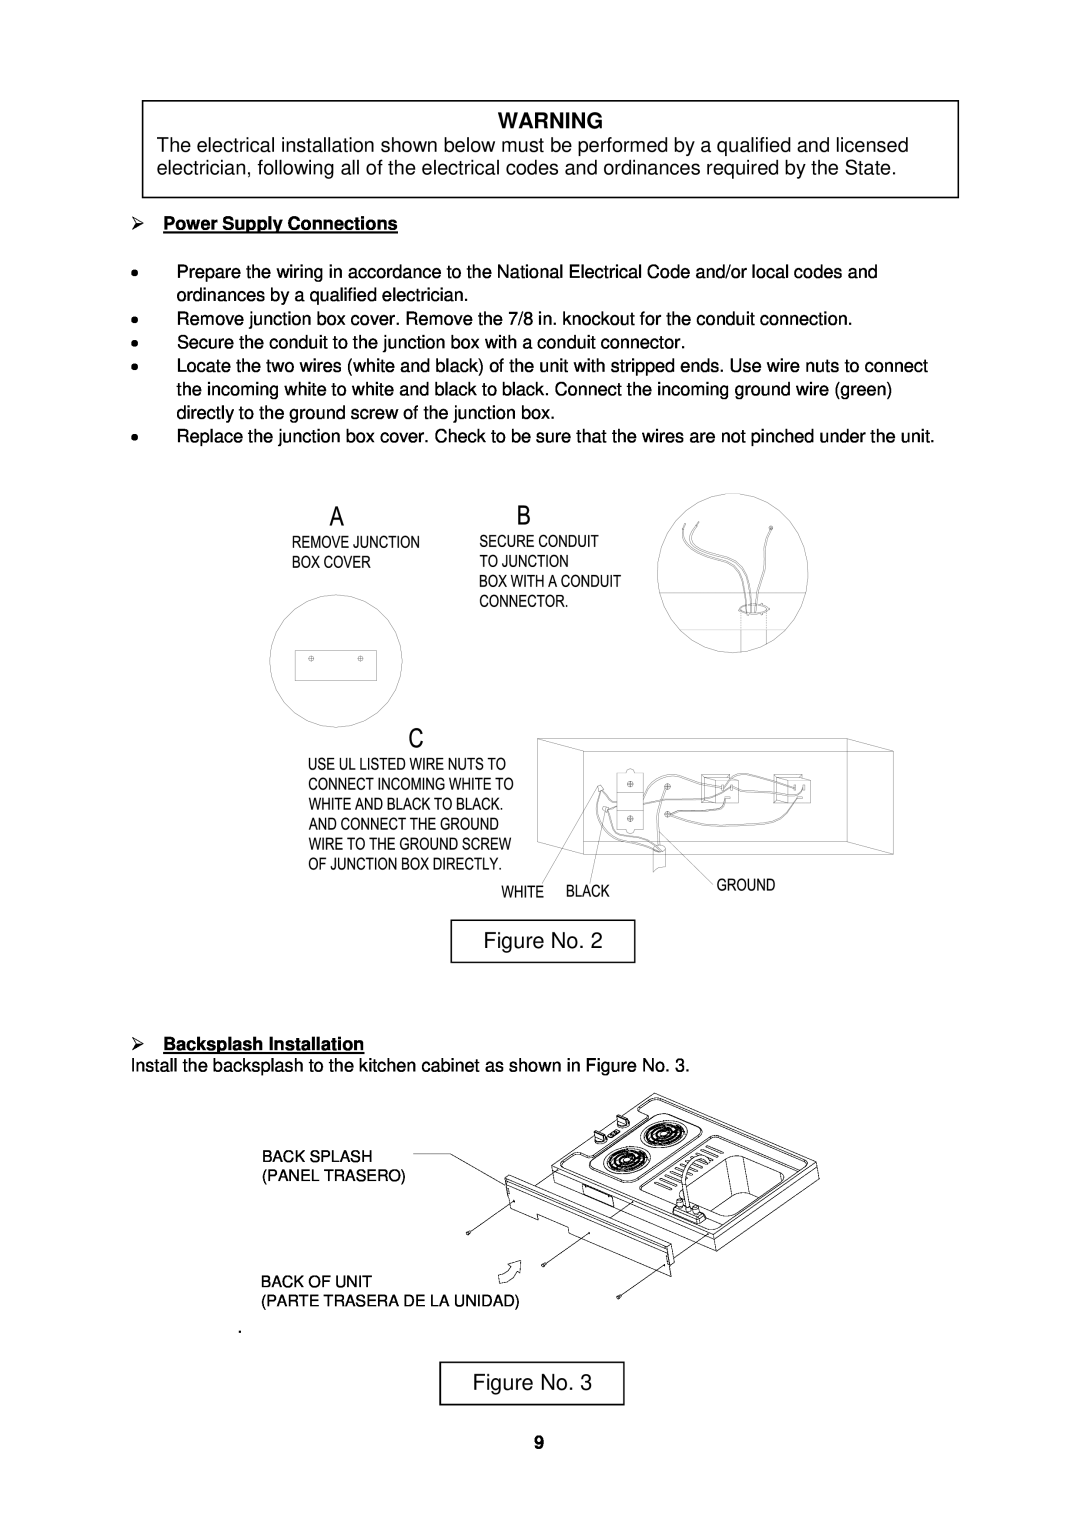 Avanti CK36-1 instruction manual Figure No, Power Supply Connections, Backsplash Installation, Back Splash Panel Trasero 